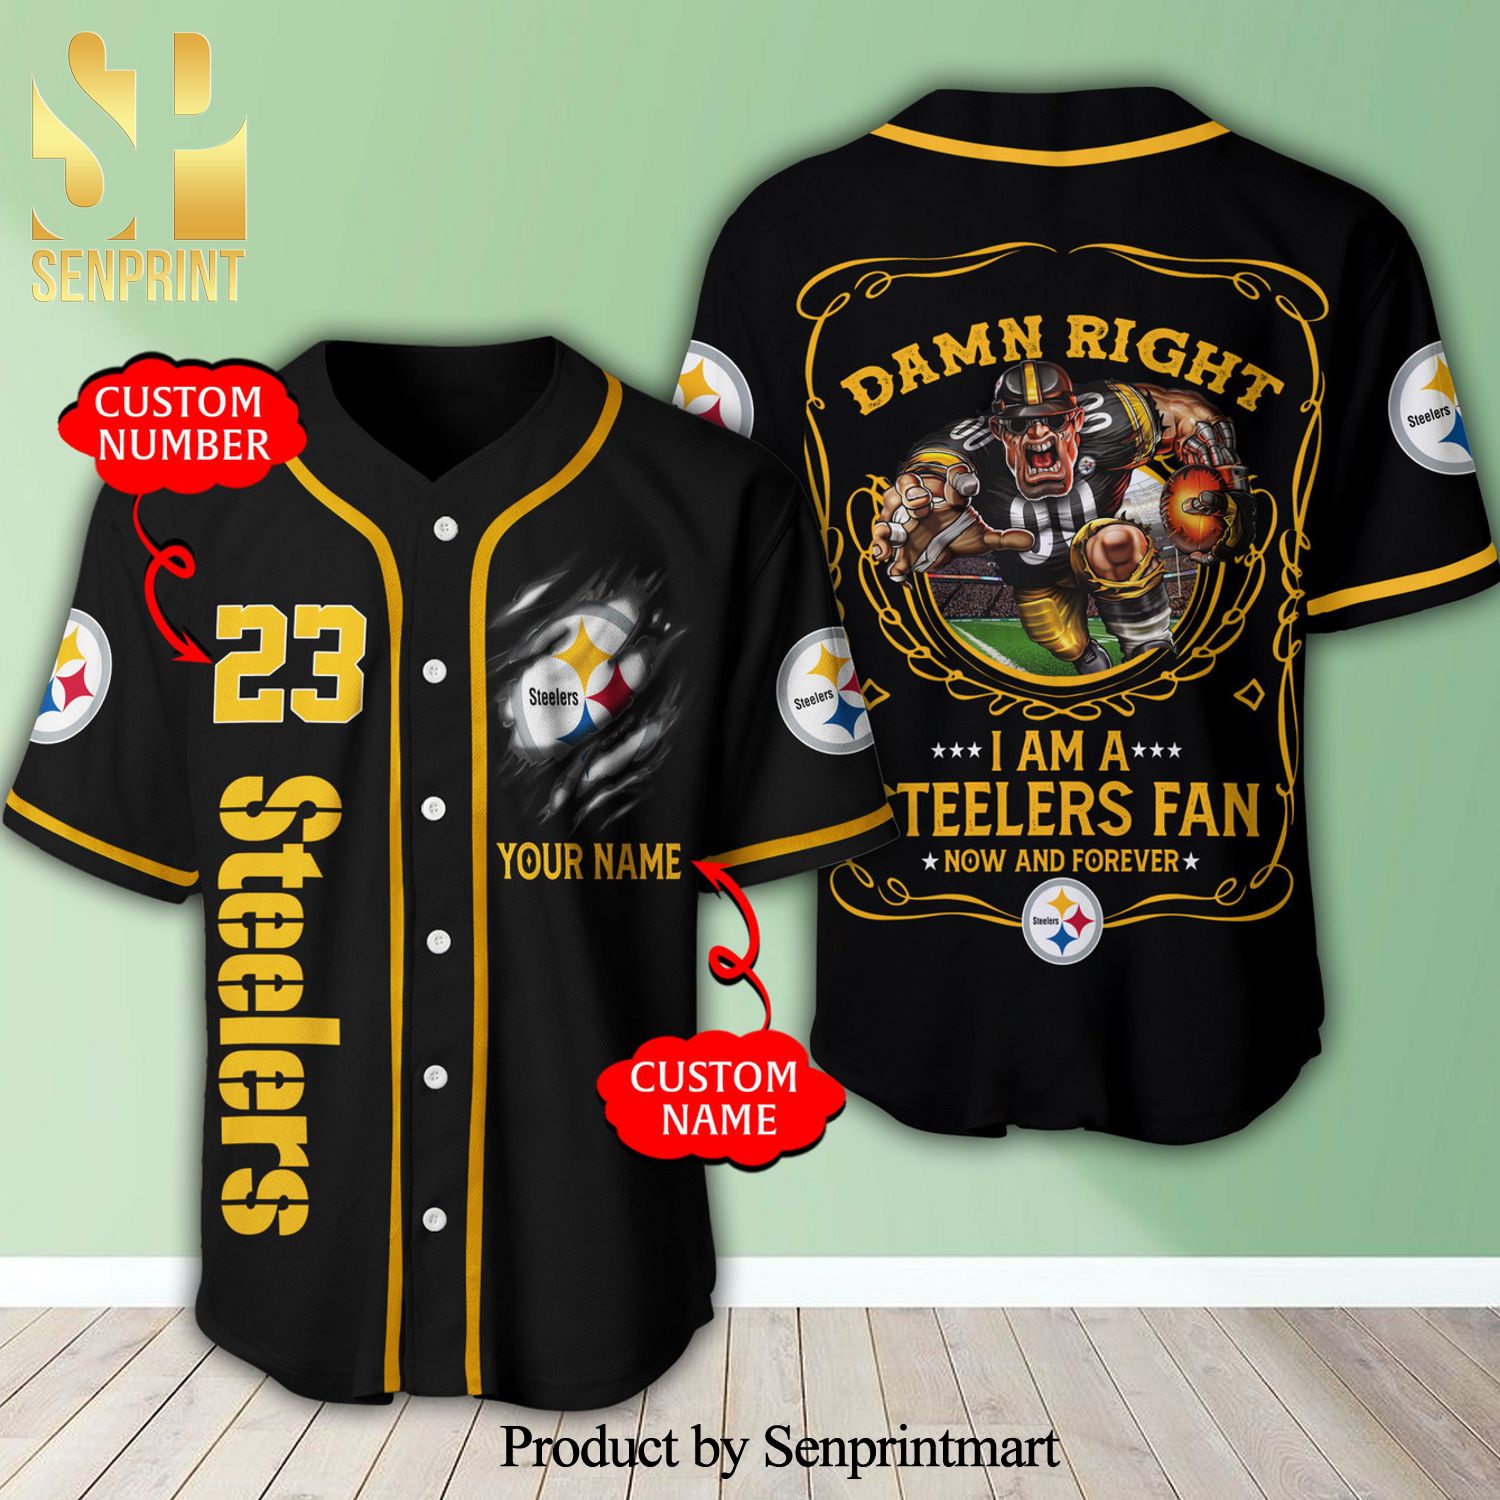 Personalized I Am A Pittsburgh Steelers Fan Full Printing Baseball Jersey – Black